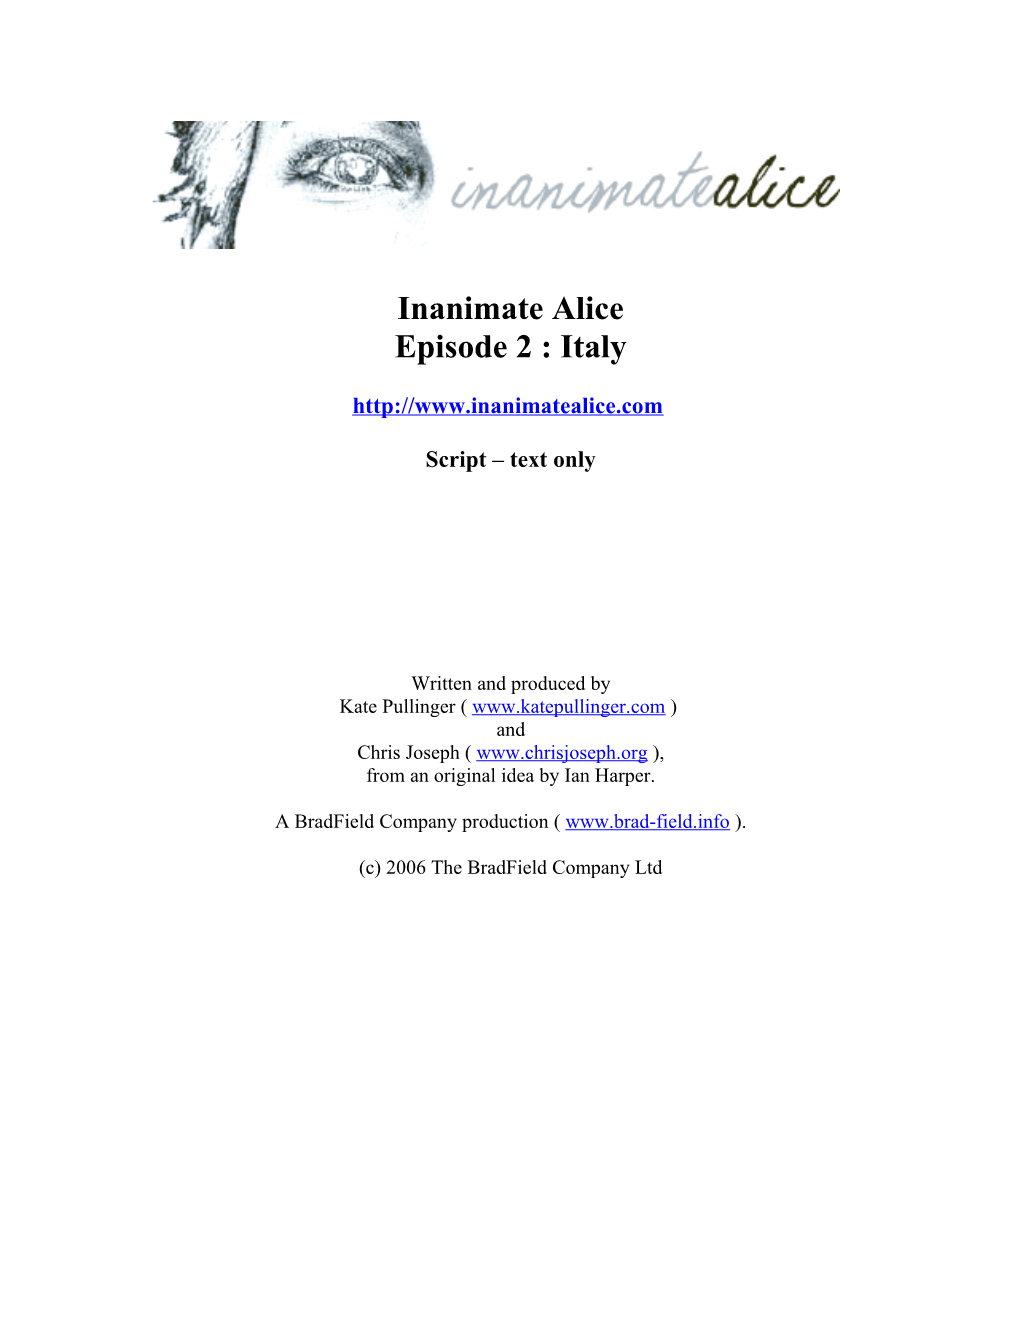 Inanimate Alice, Episode 2: Italy